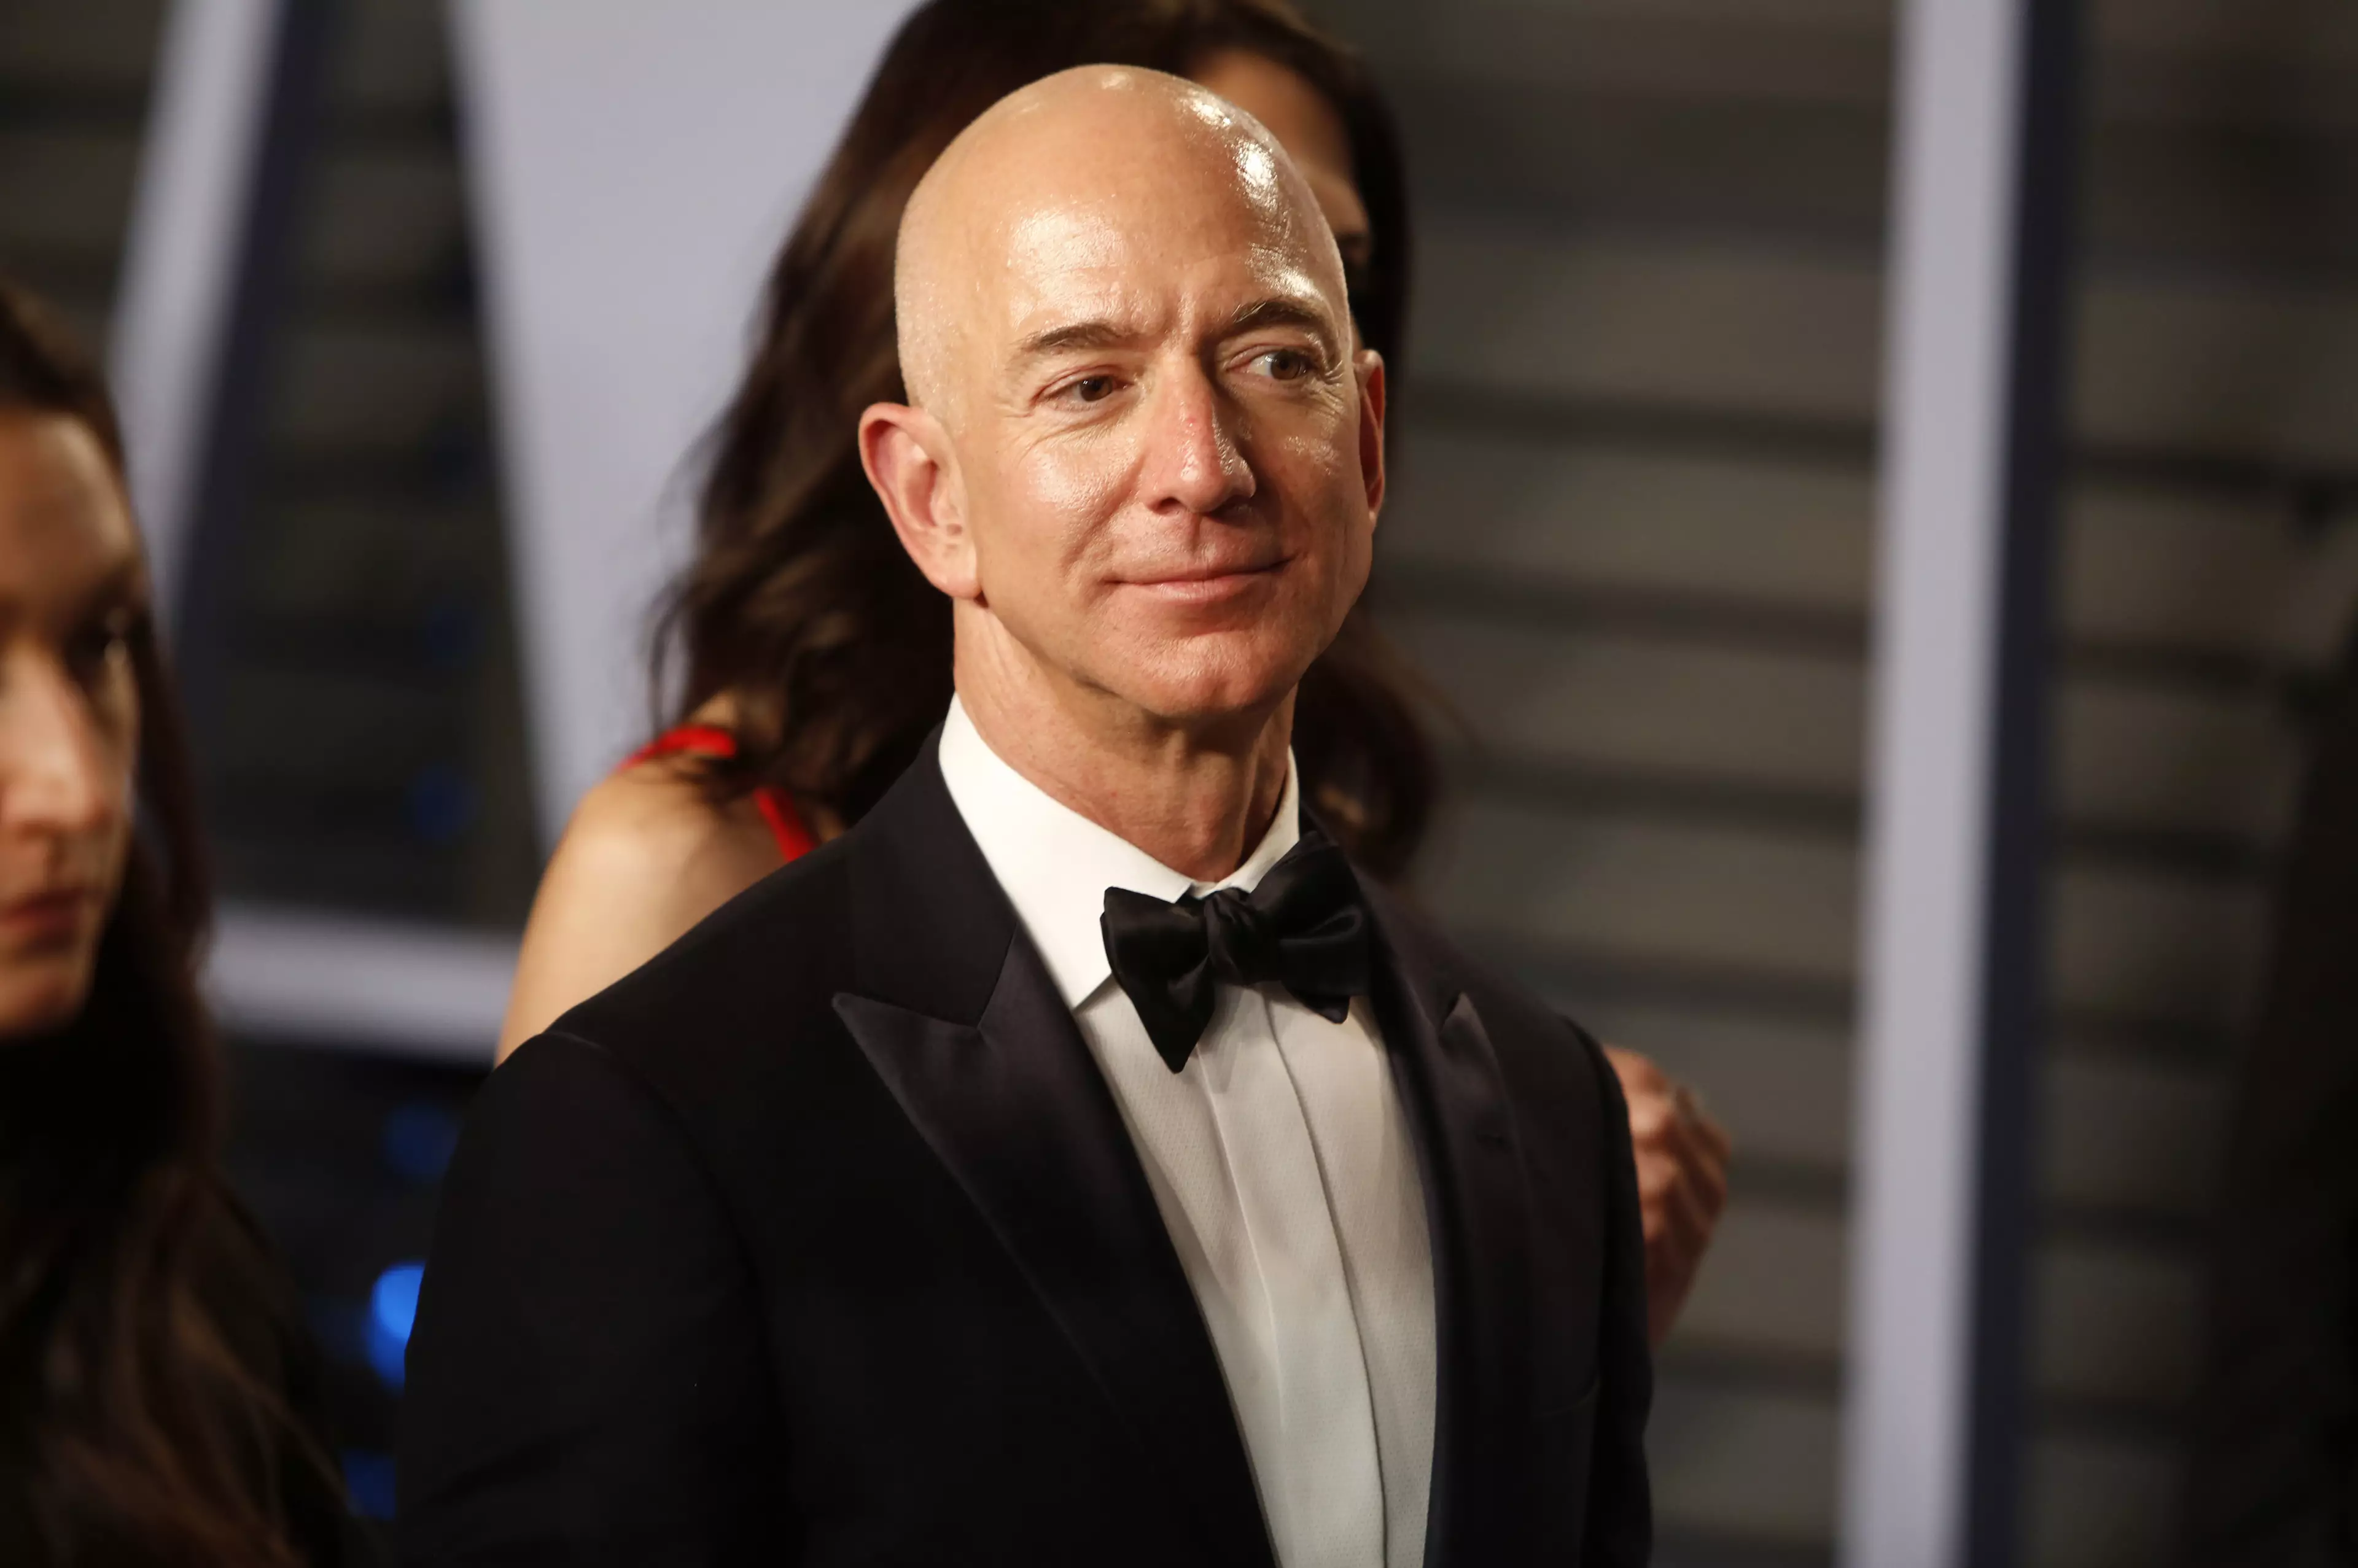 Amazon boss Jeff Bezos is said to had outbursts at staff.